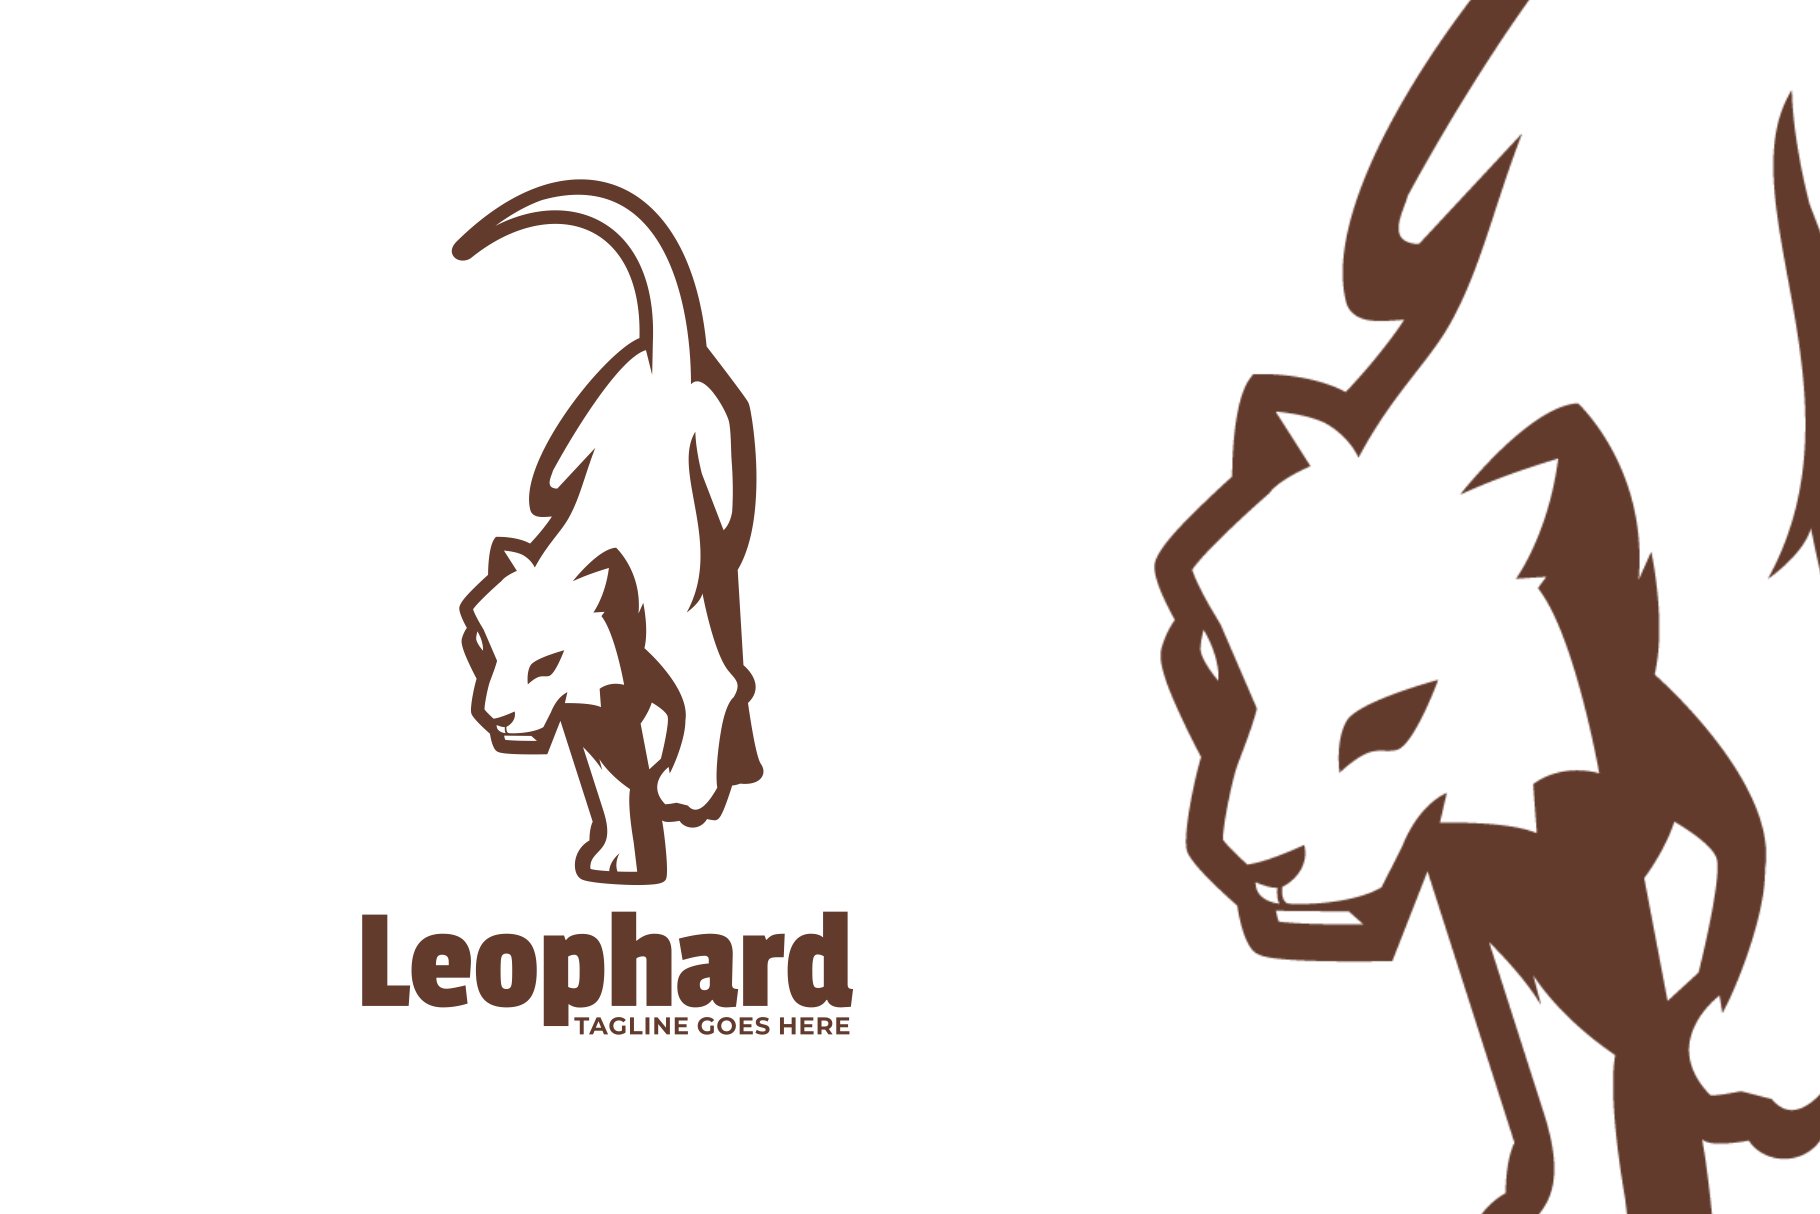 Leophard Logo Vector cover image.